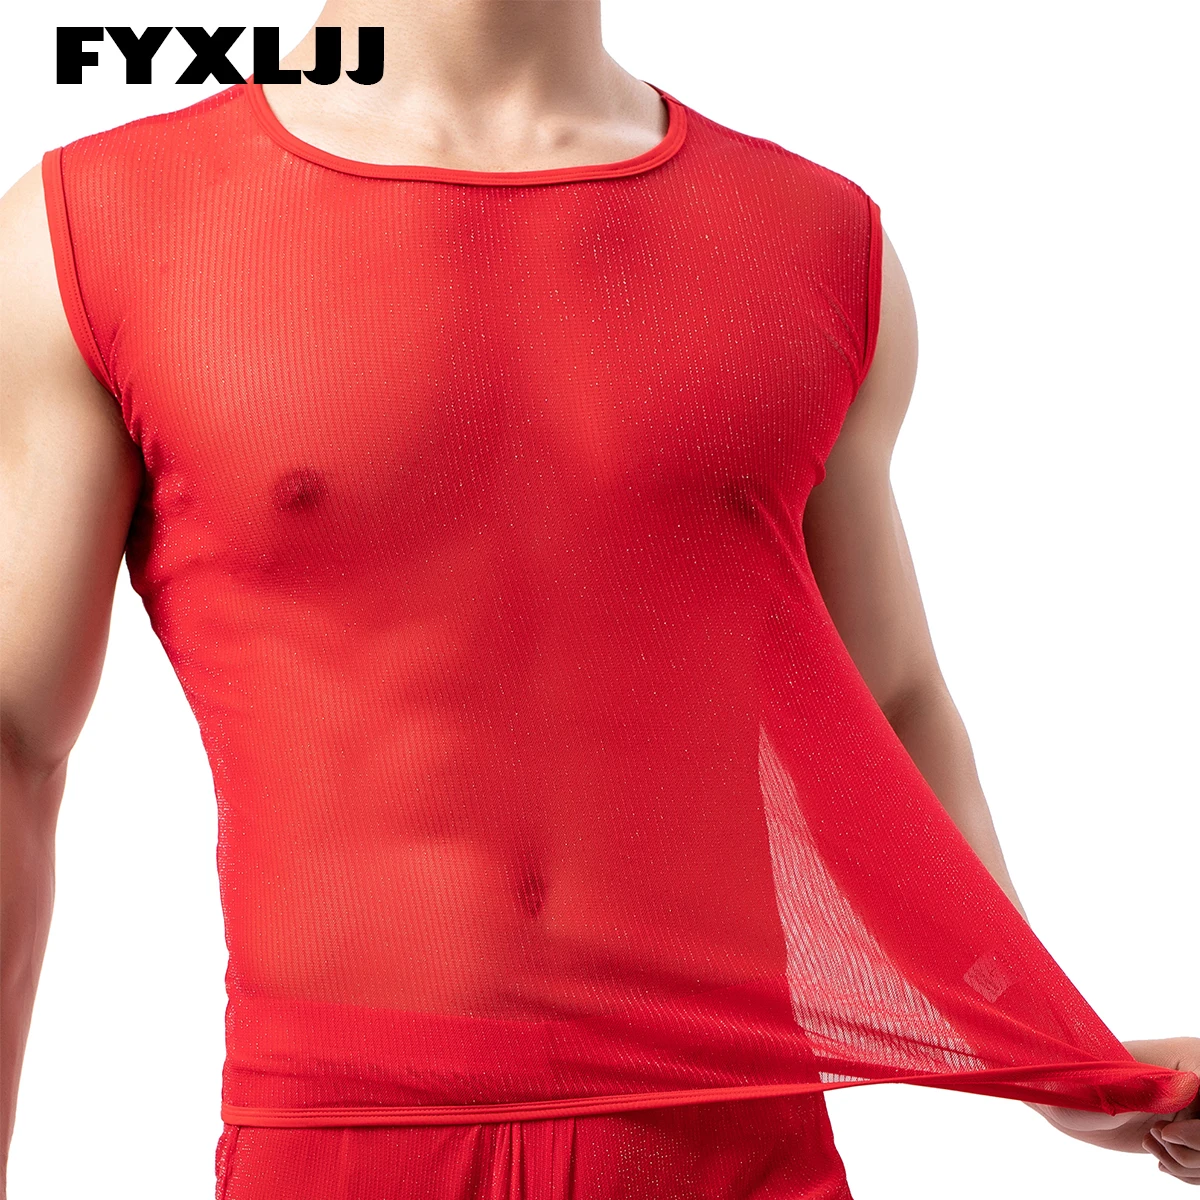 

FYXLJJ Men's Sexy Transparent Musle Vest Mesh Sheer Tank Tops Male Gym Fitness See-through Undershirts Sleeveless Sport Singlet